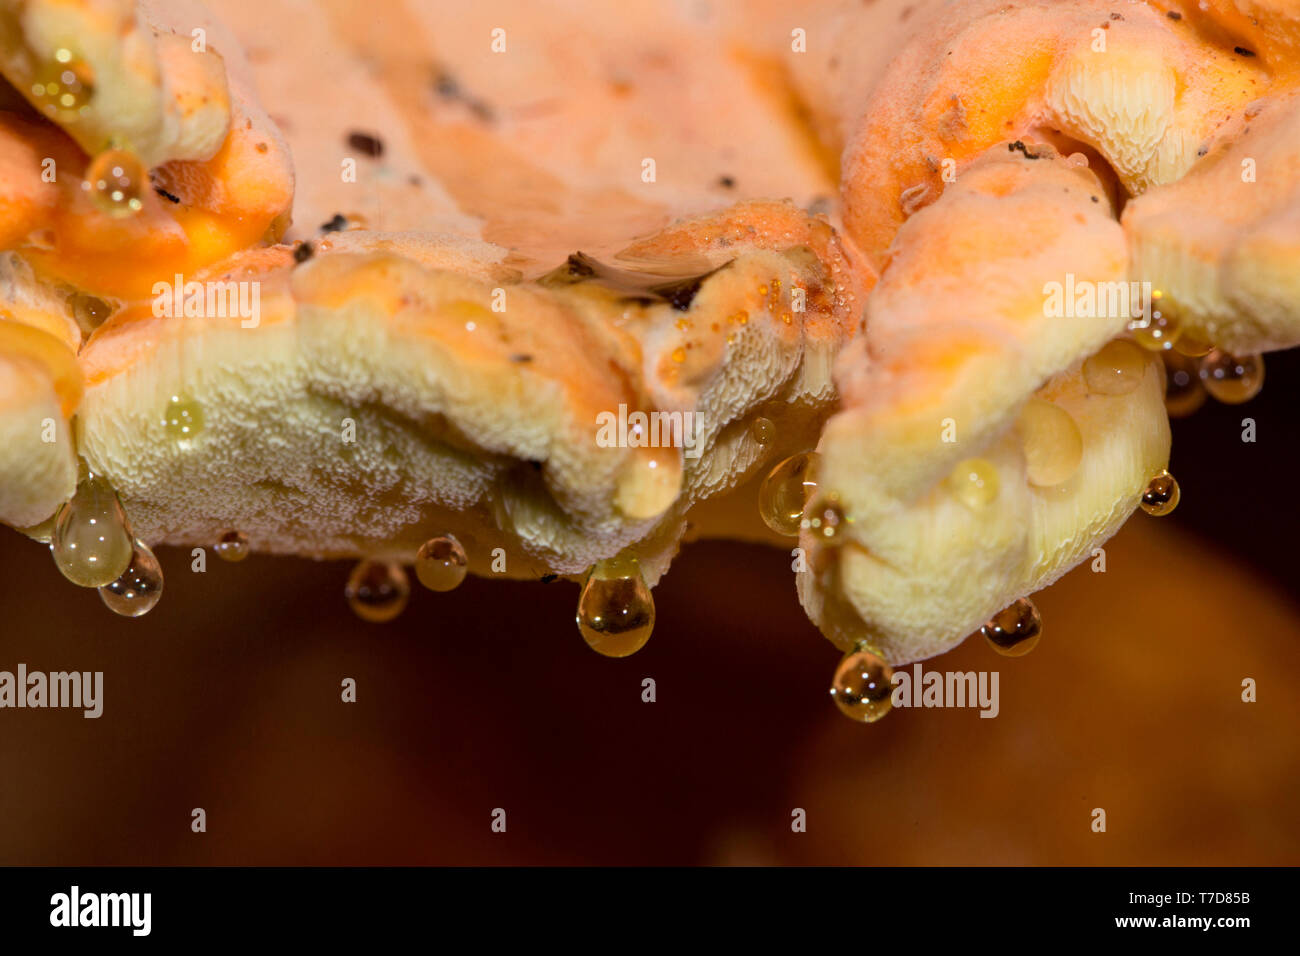 crab-of-the-woods, sulphur shelf, guttation drop, (Laetiporus sulphureus) Stock Photo